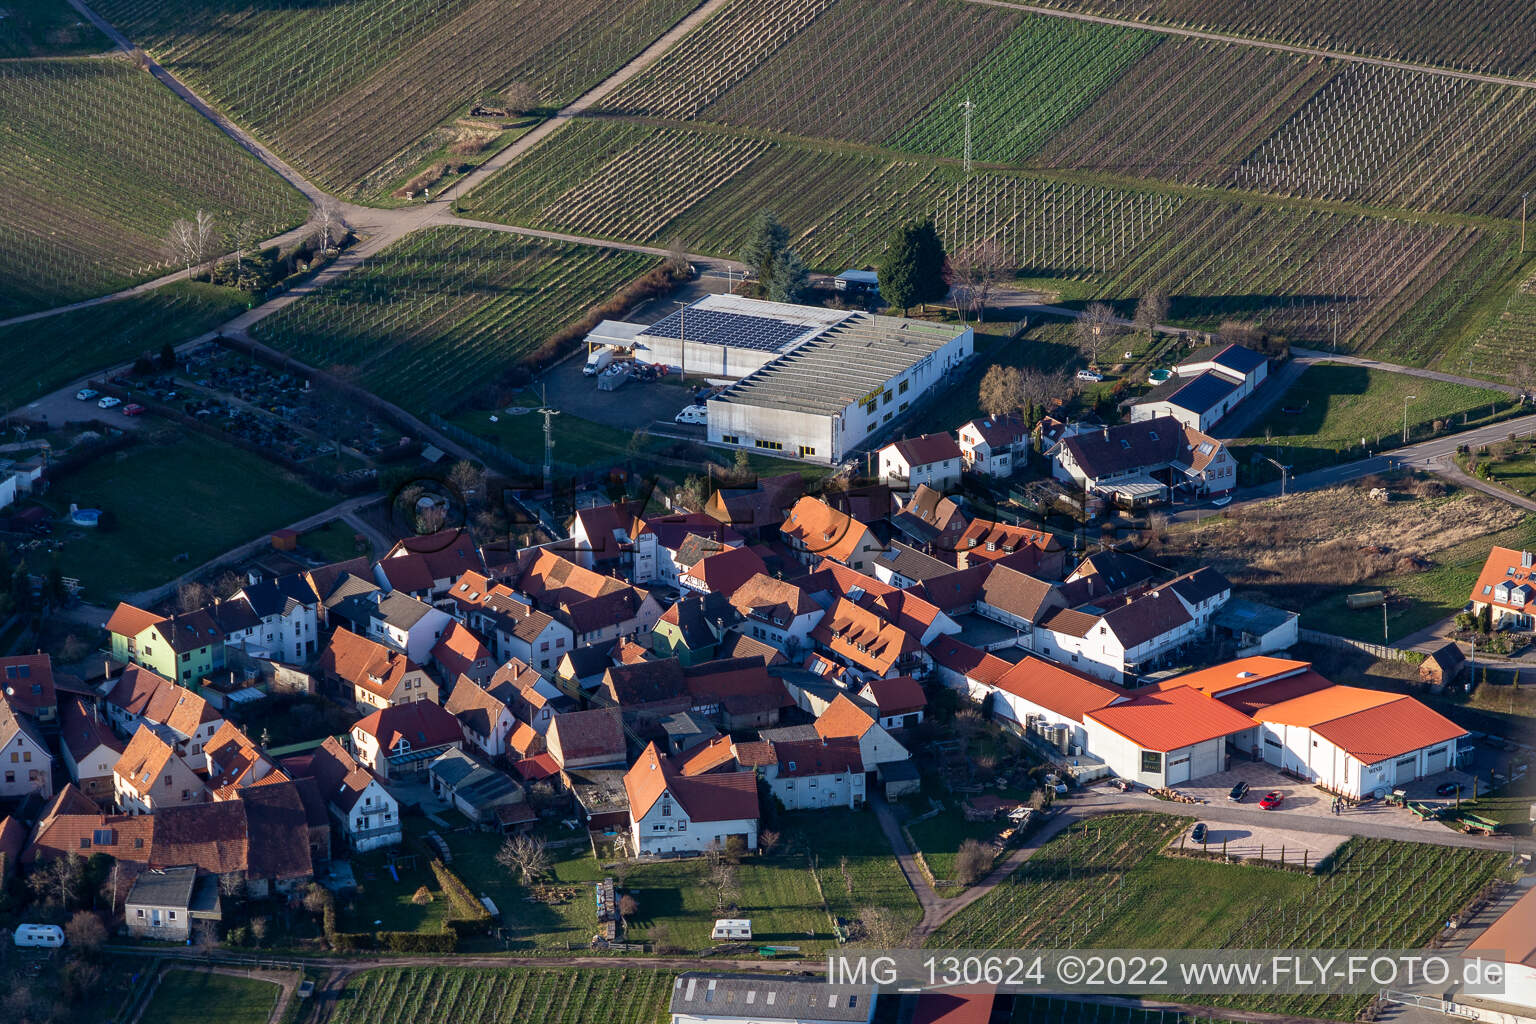 Ehrhart winery in Göcklingen in the state Rhineland-Palatinate, Germany